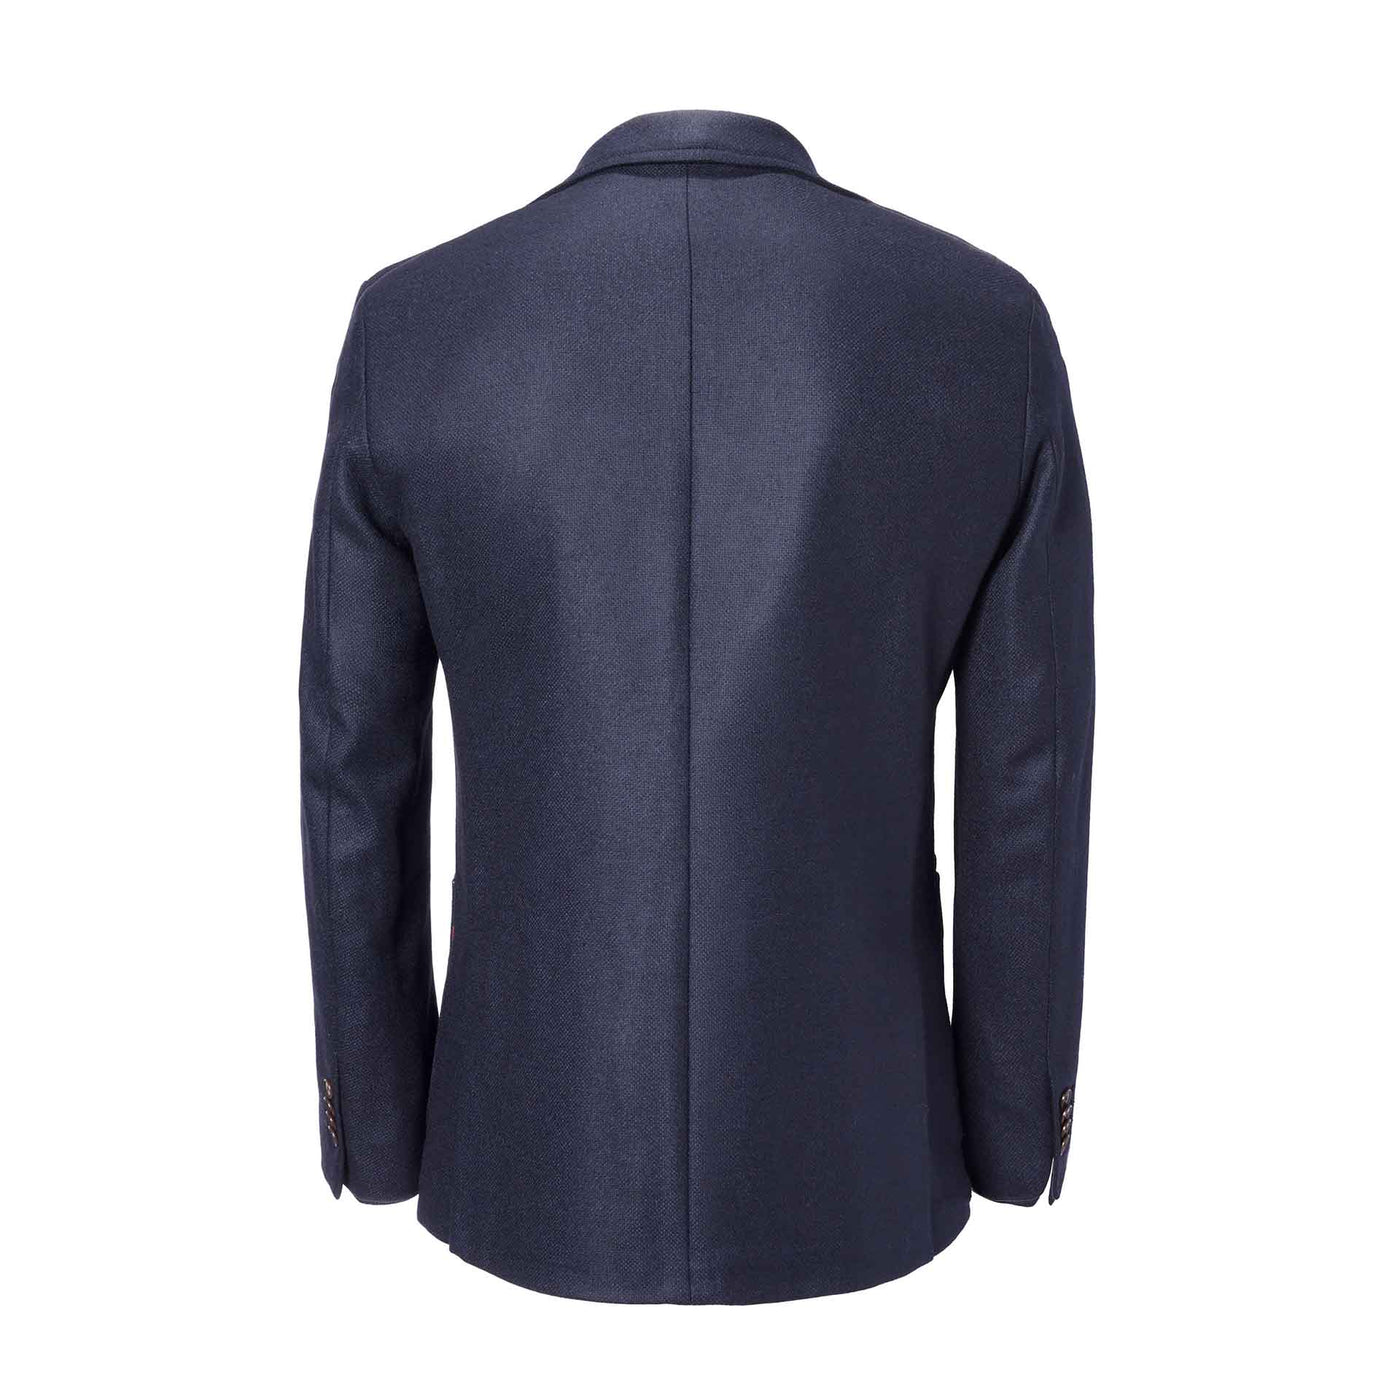 Amalfi coat blue - Peletería Gabriel , Tienda online, Zaragoza